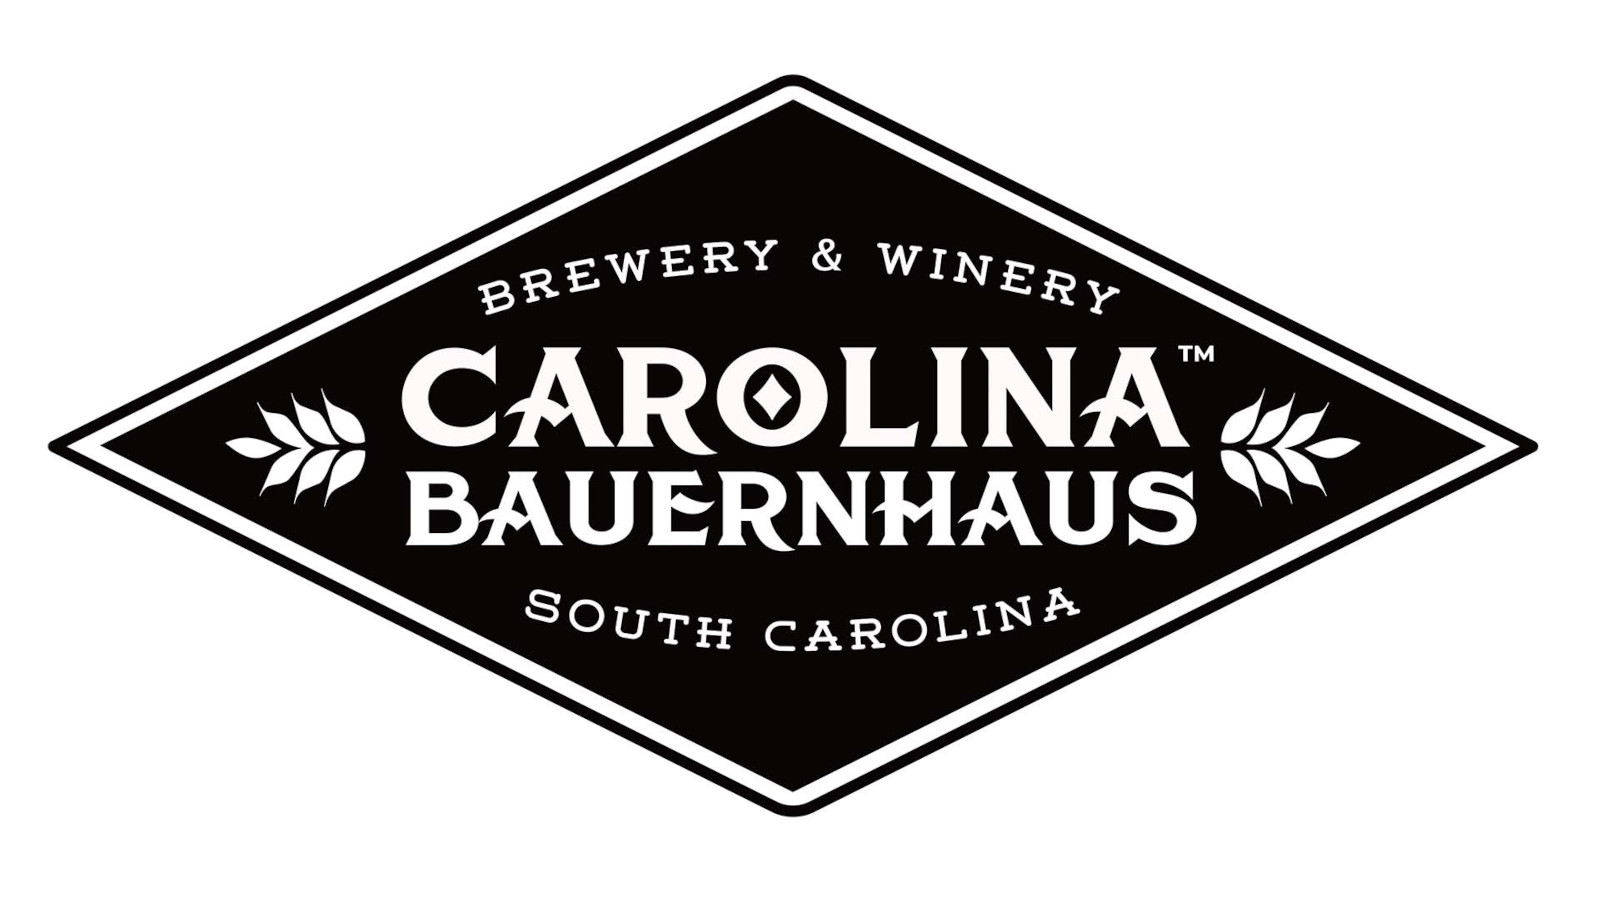 Carolina Bauernhaus Brewery & Winery $100 Gift Card US 56.5$